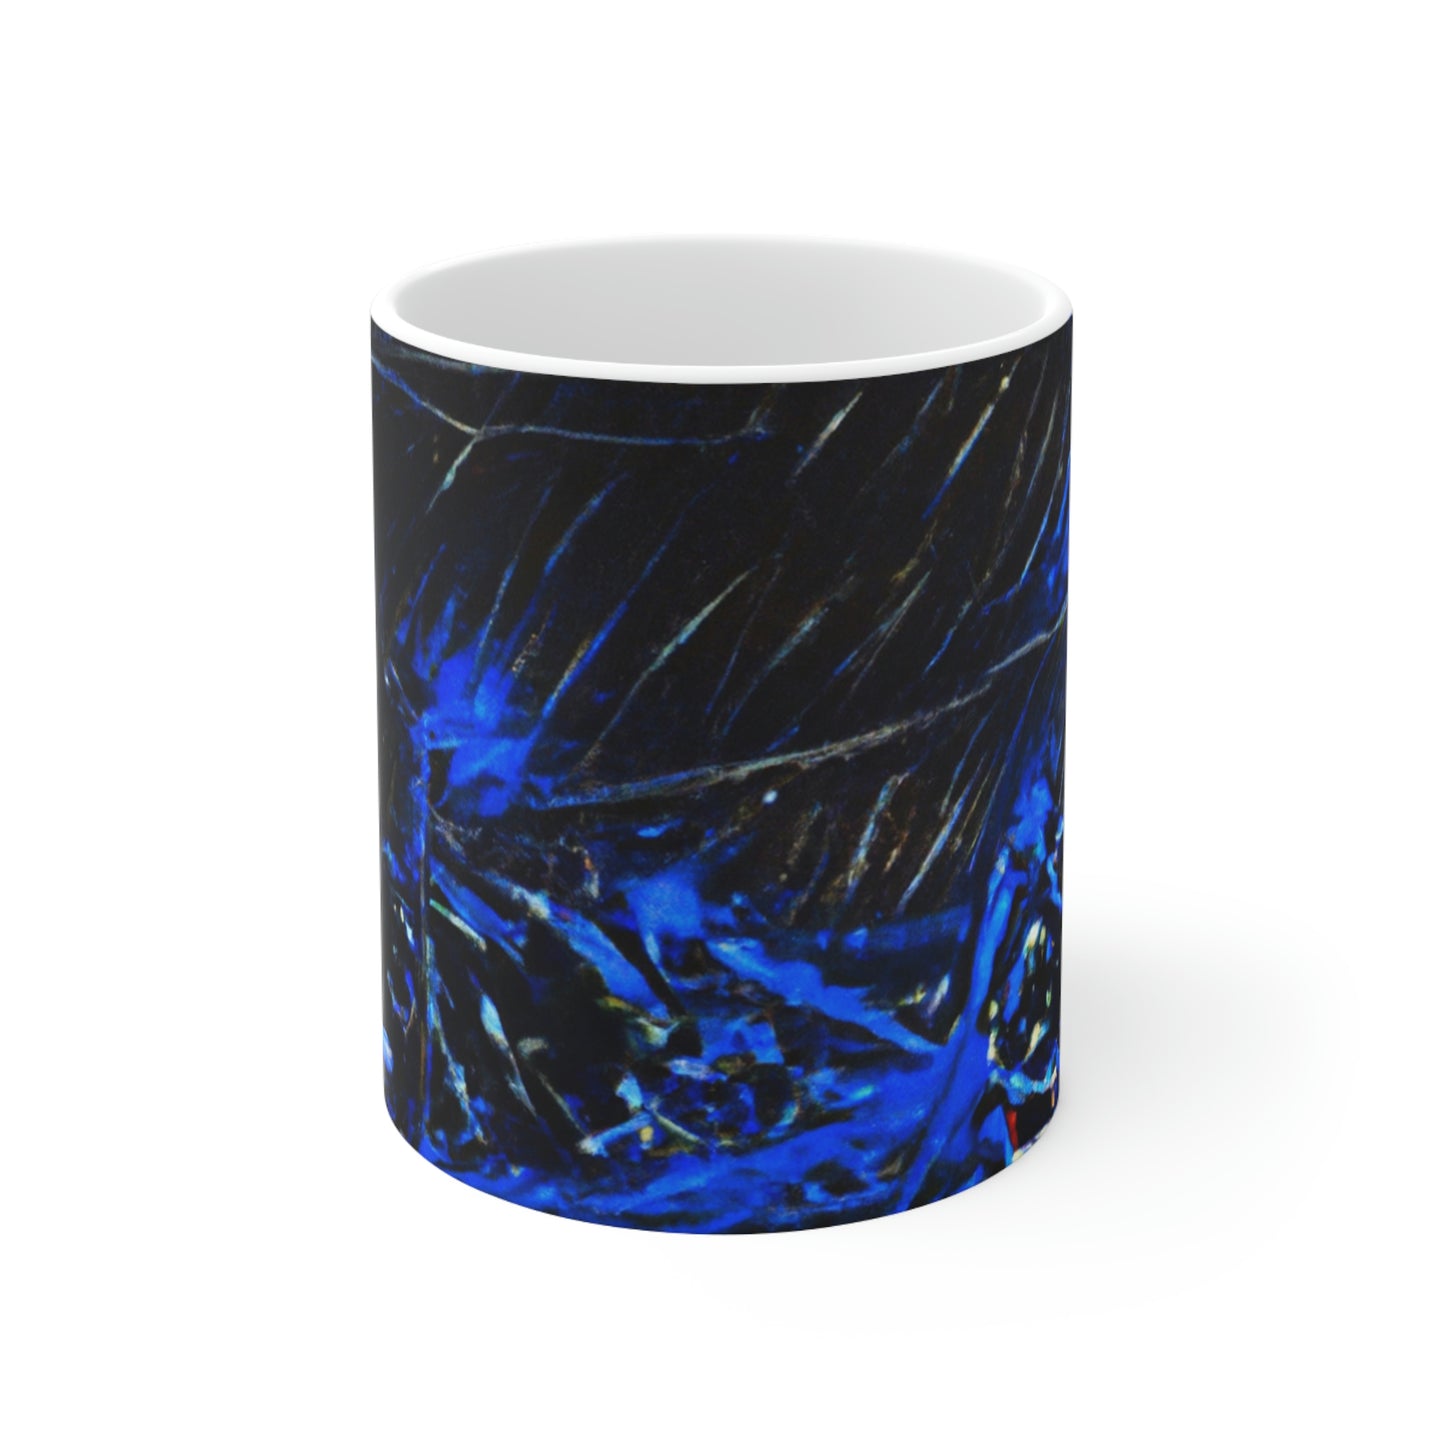 "A Blazing, Empty Night" - The Alien Ceramic Mug 11 oz